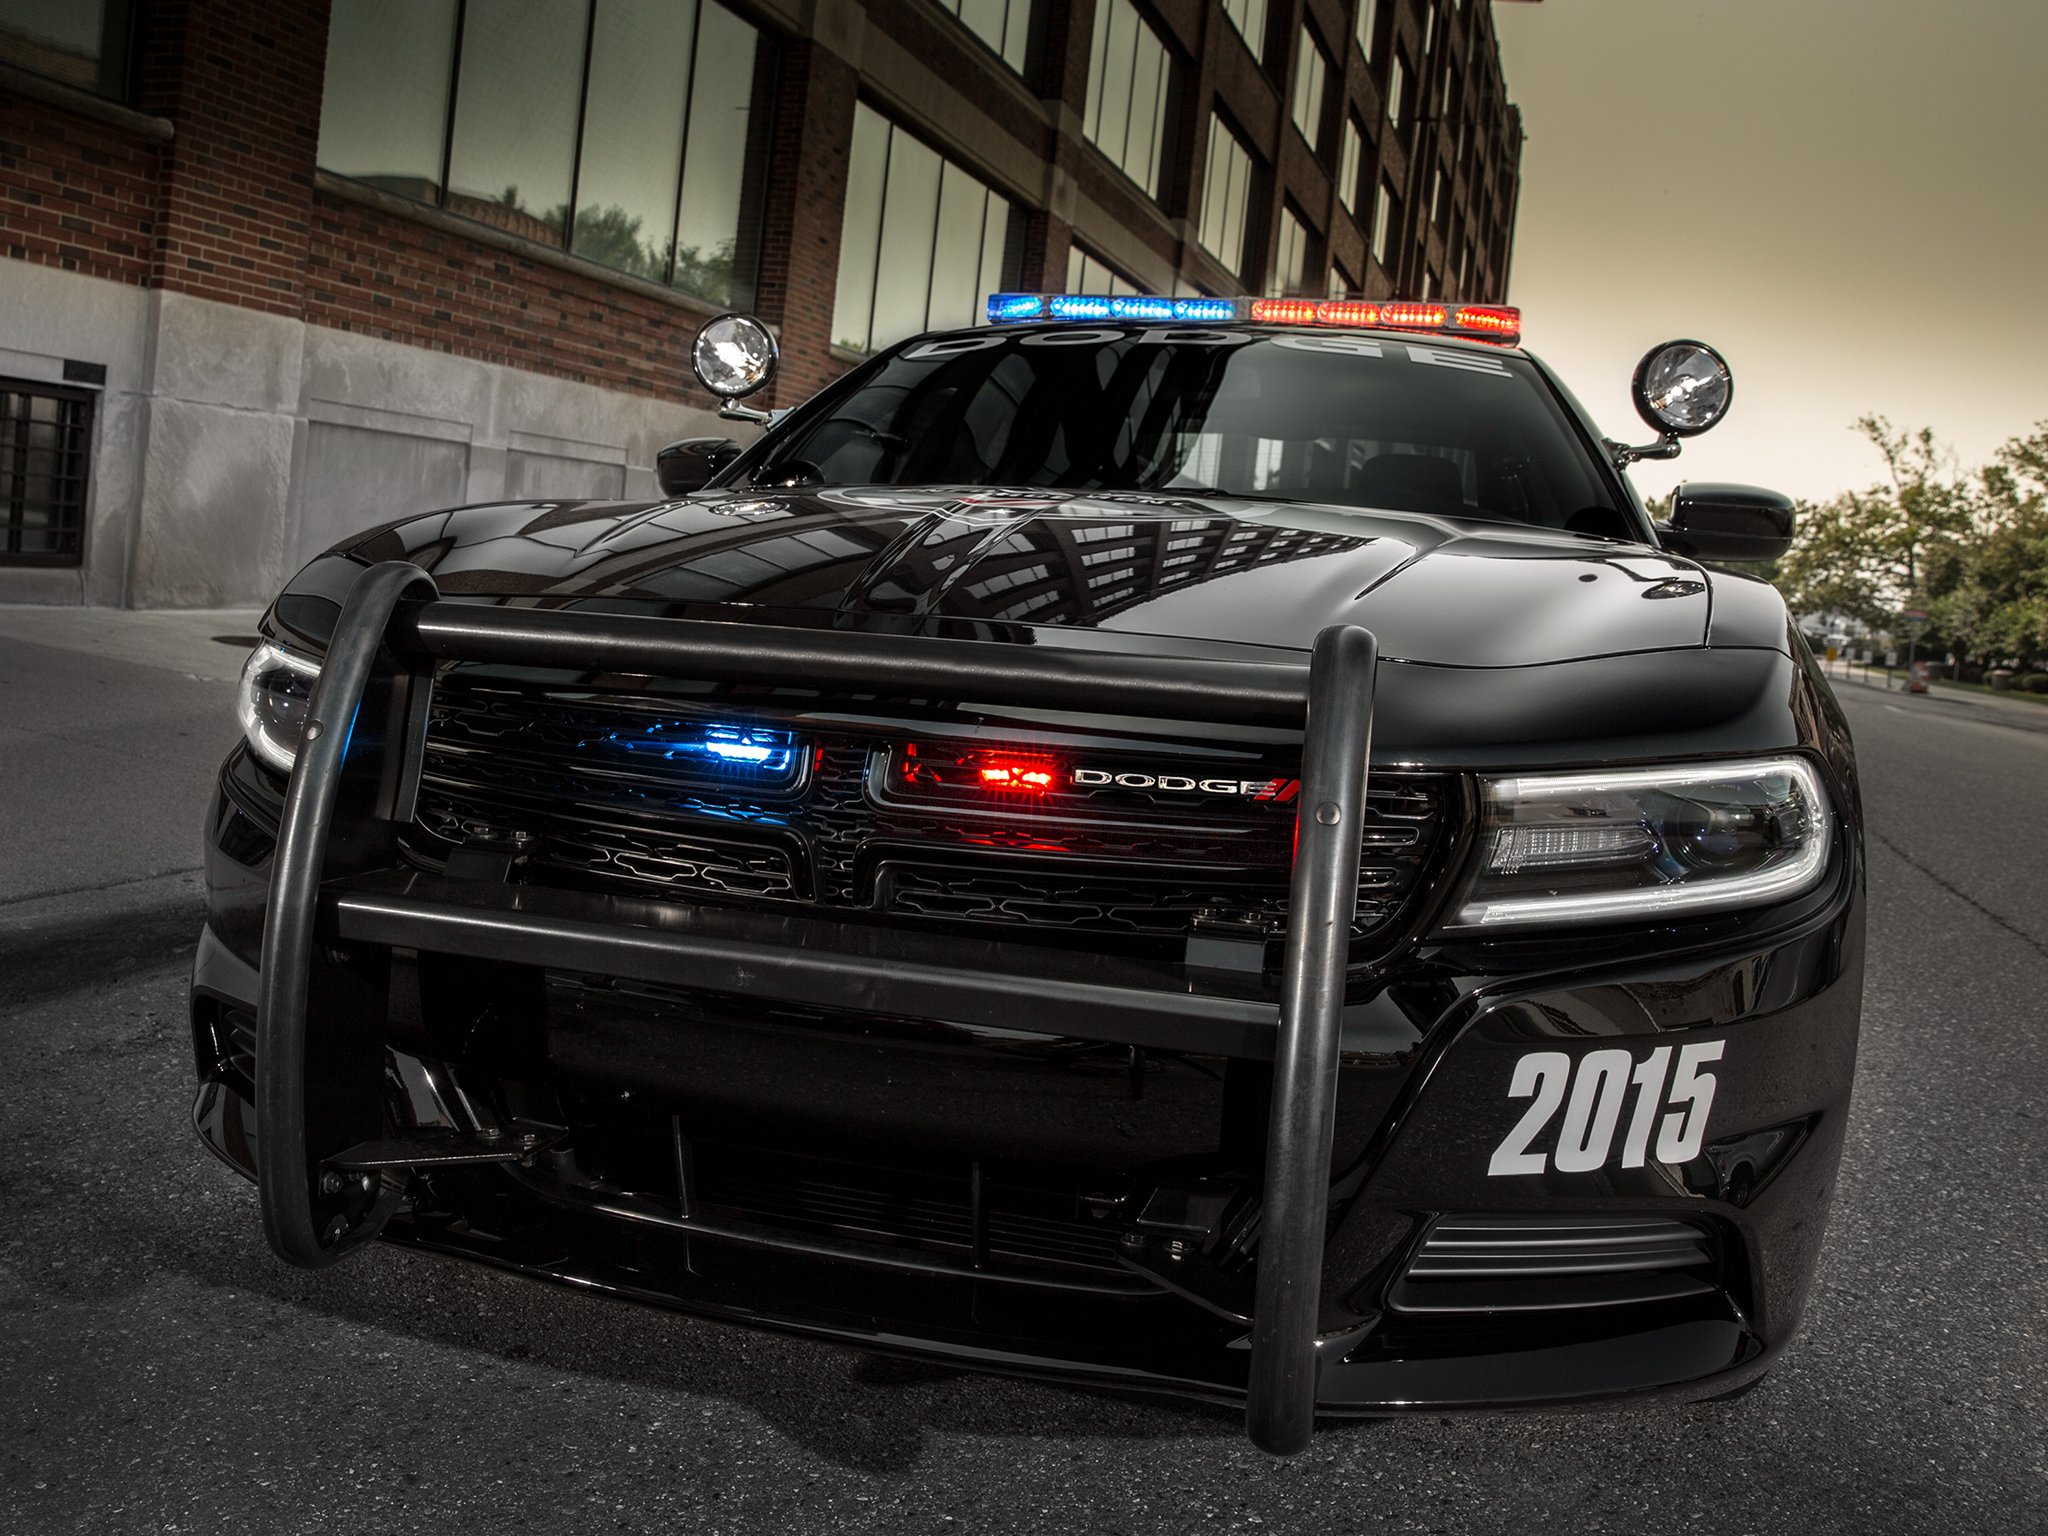 2015, Dodge, Charger, Pursuit,  l d , Police, Emergency, Muscle Wallpaper